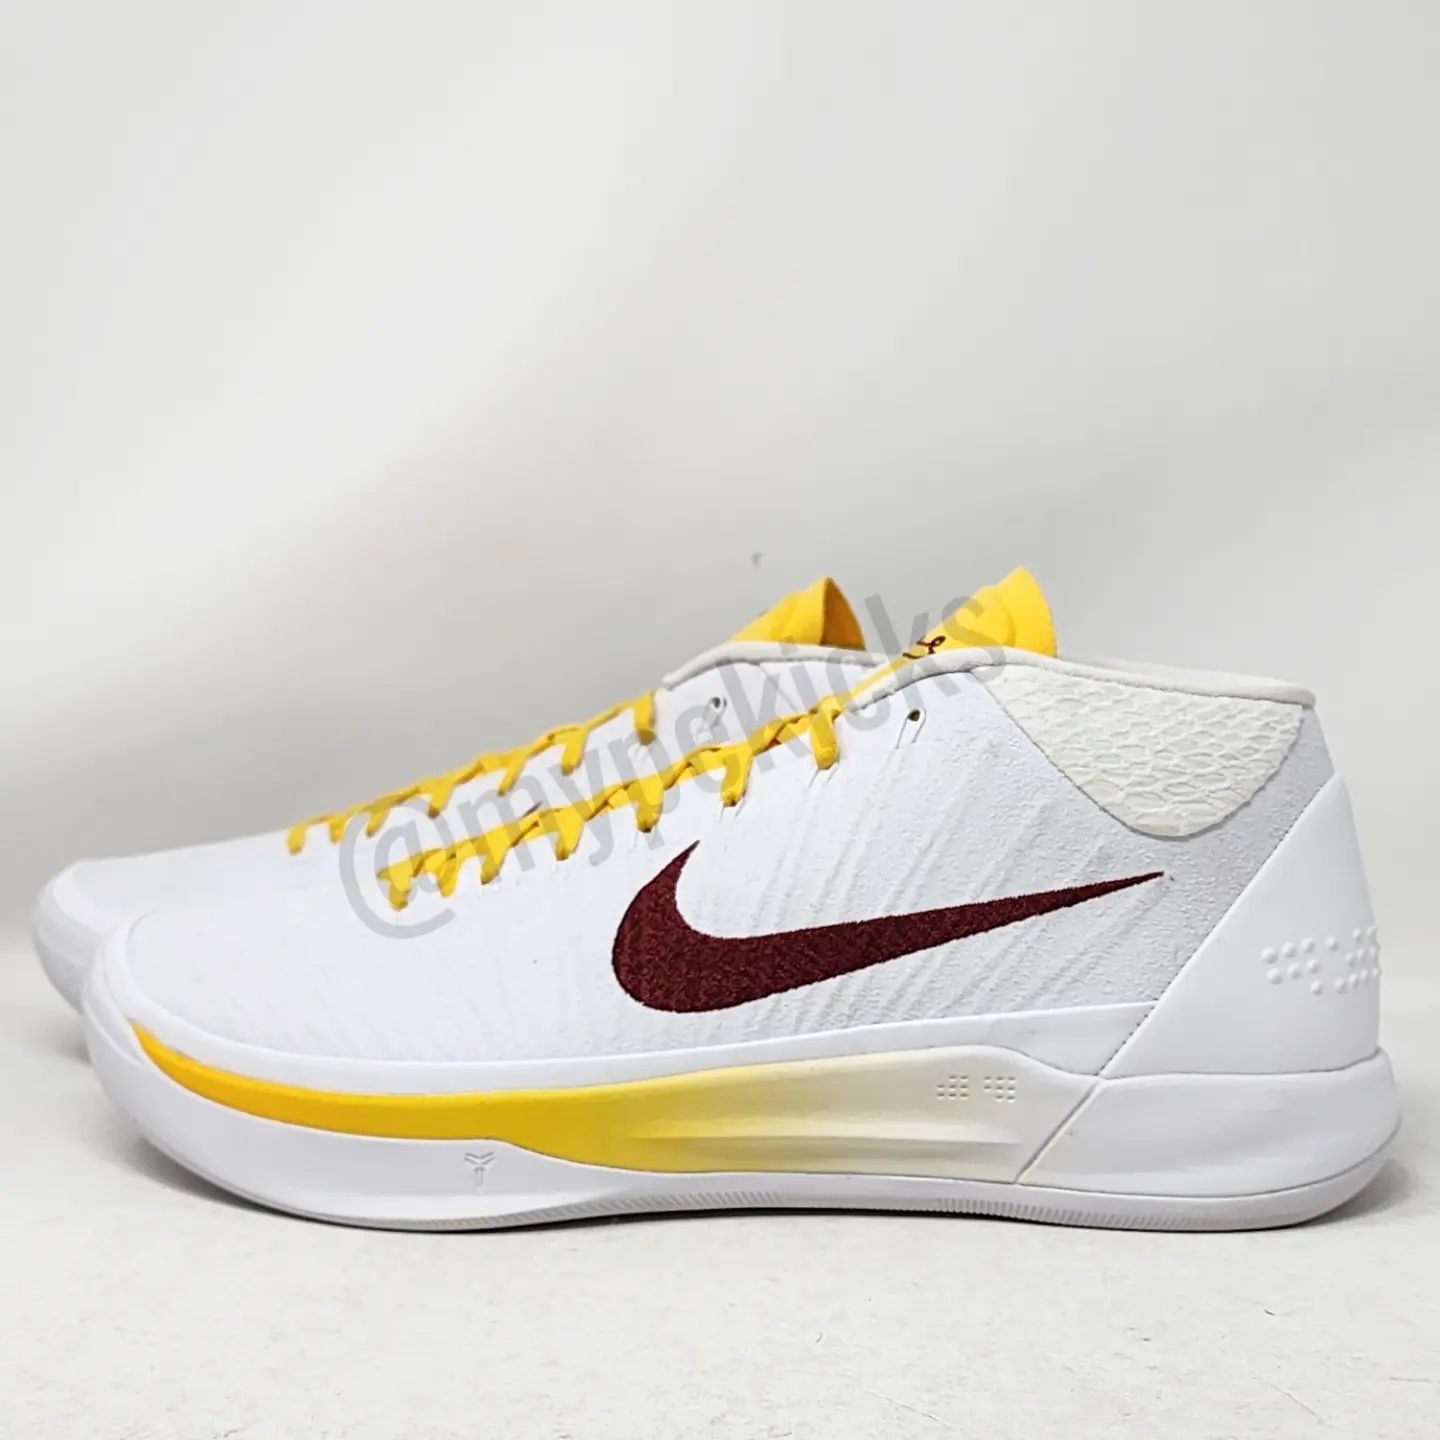 Nike Kobe A.D. Mid - Isaiah Thomas Cleveland Cavaliers PE